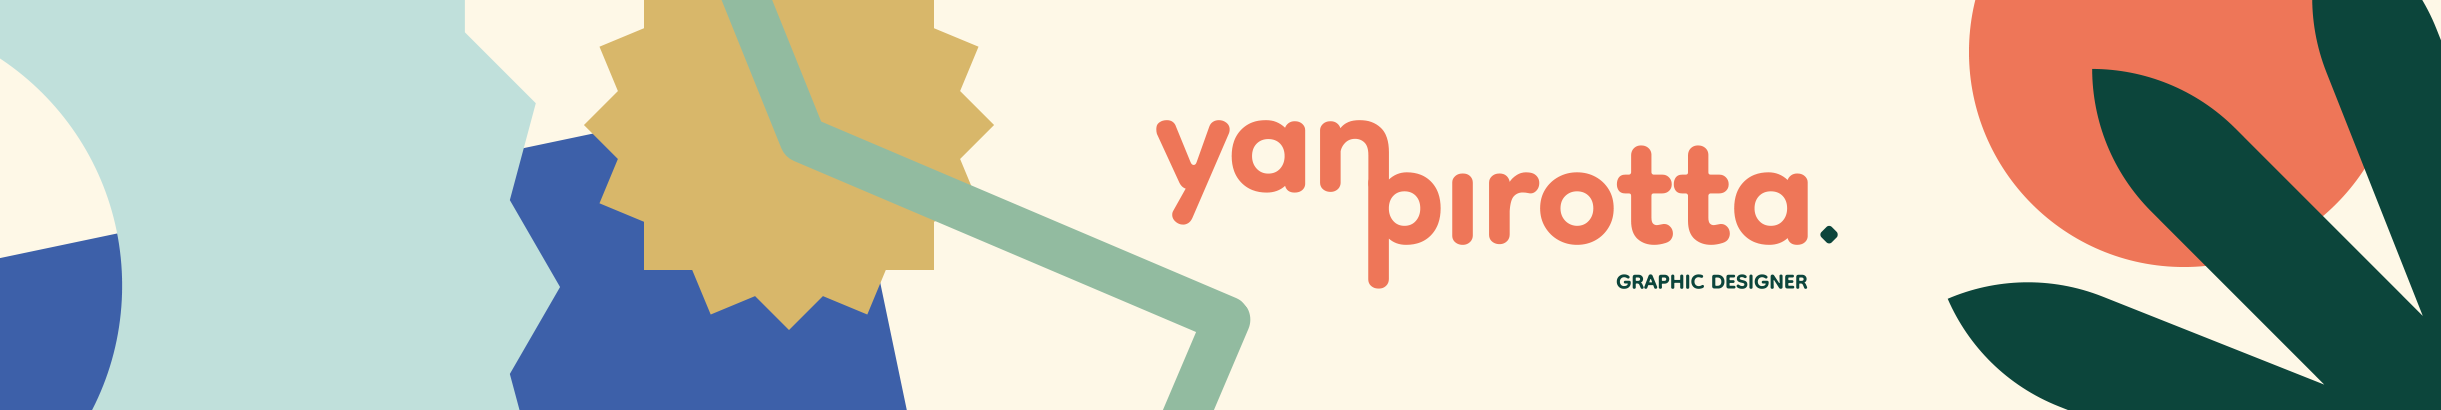 Yan Pirotta 雪岩's profile banner